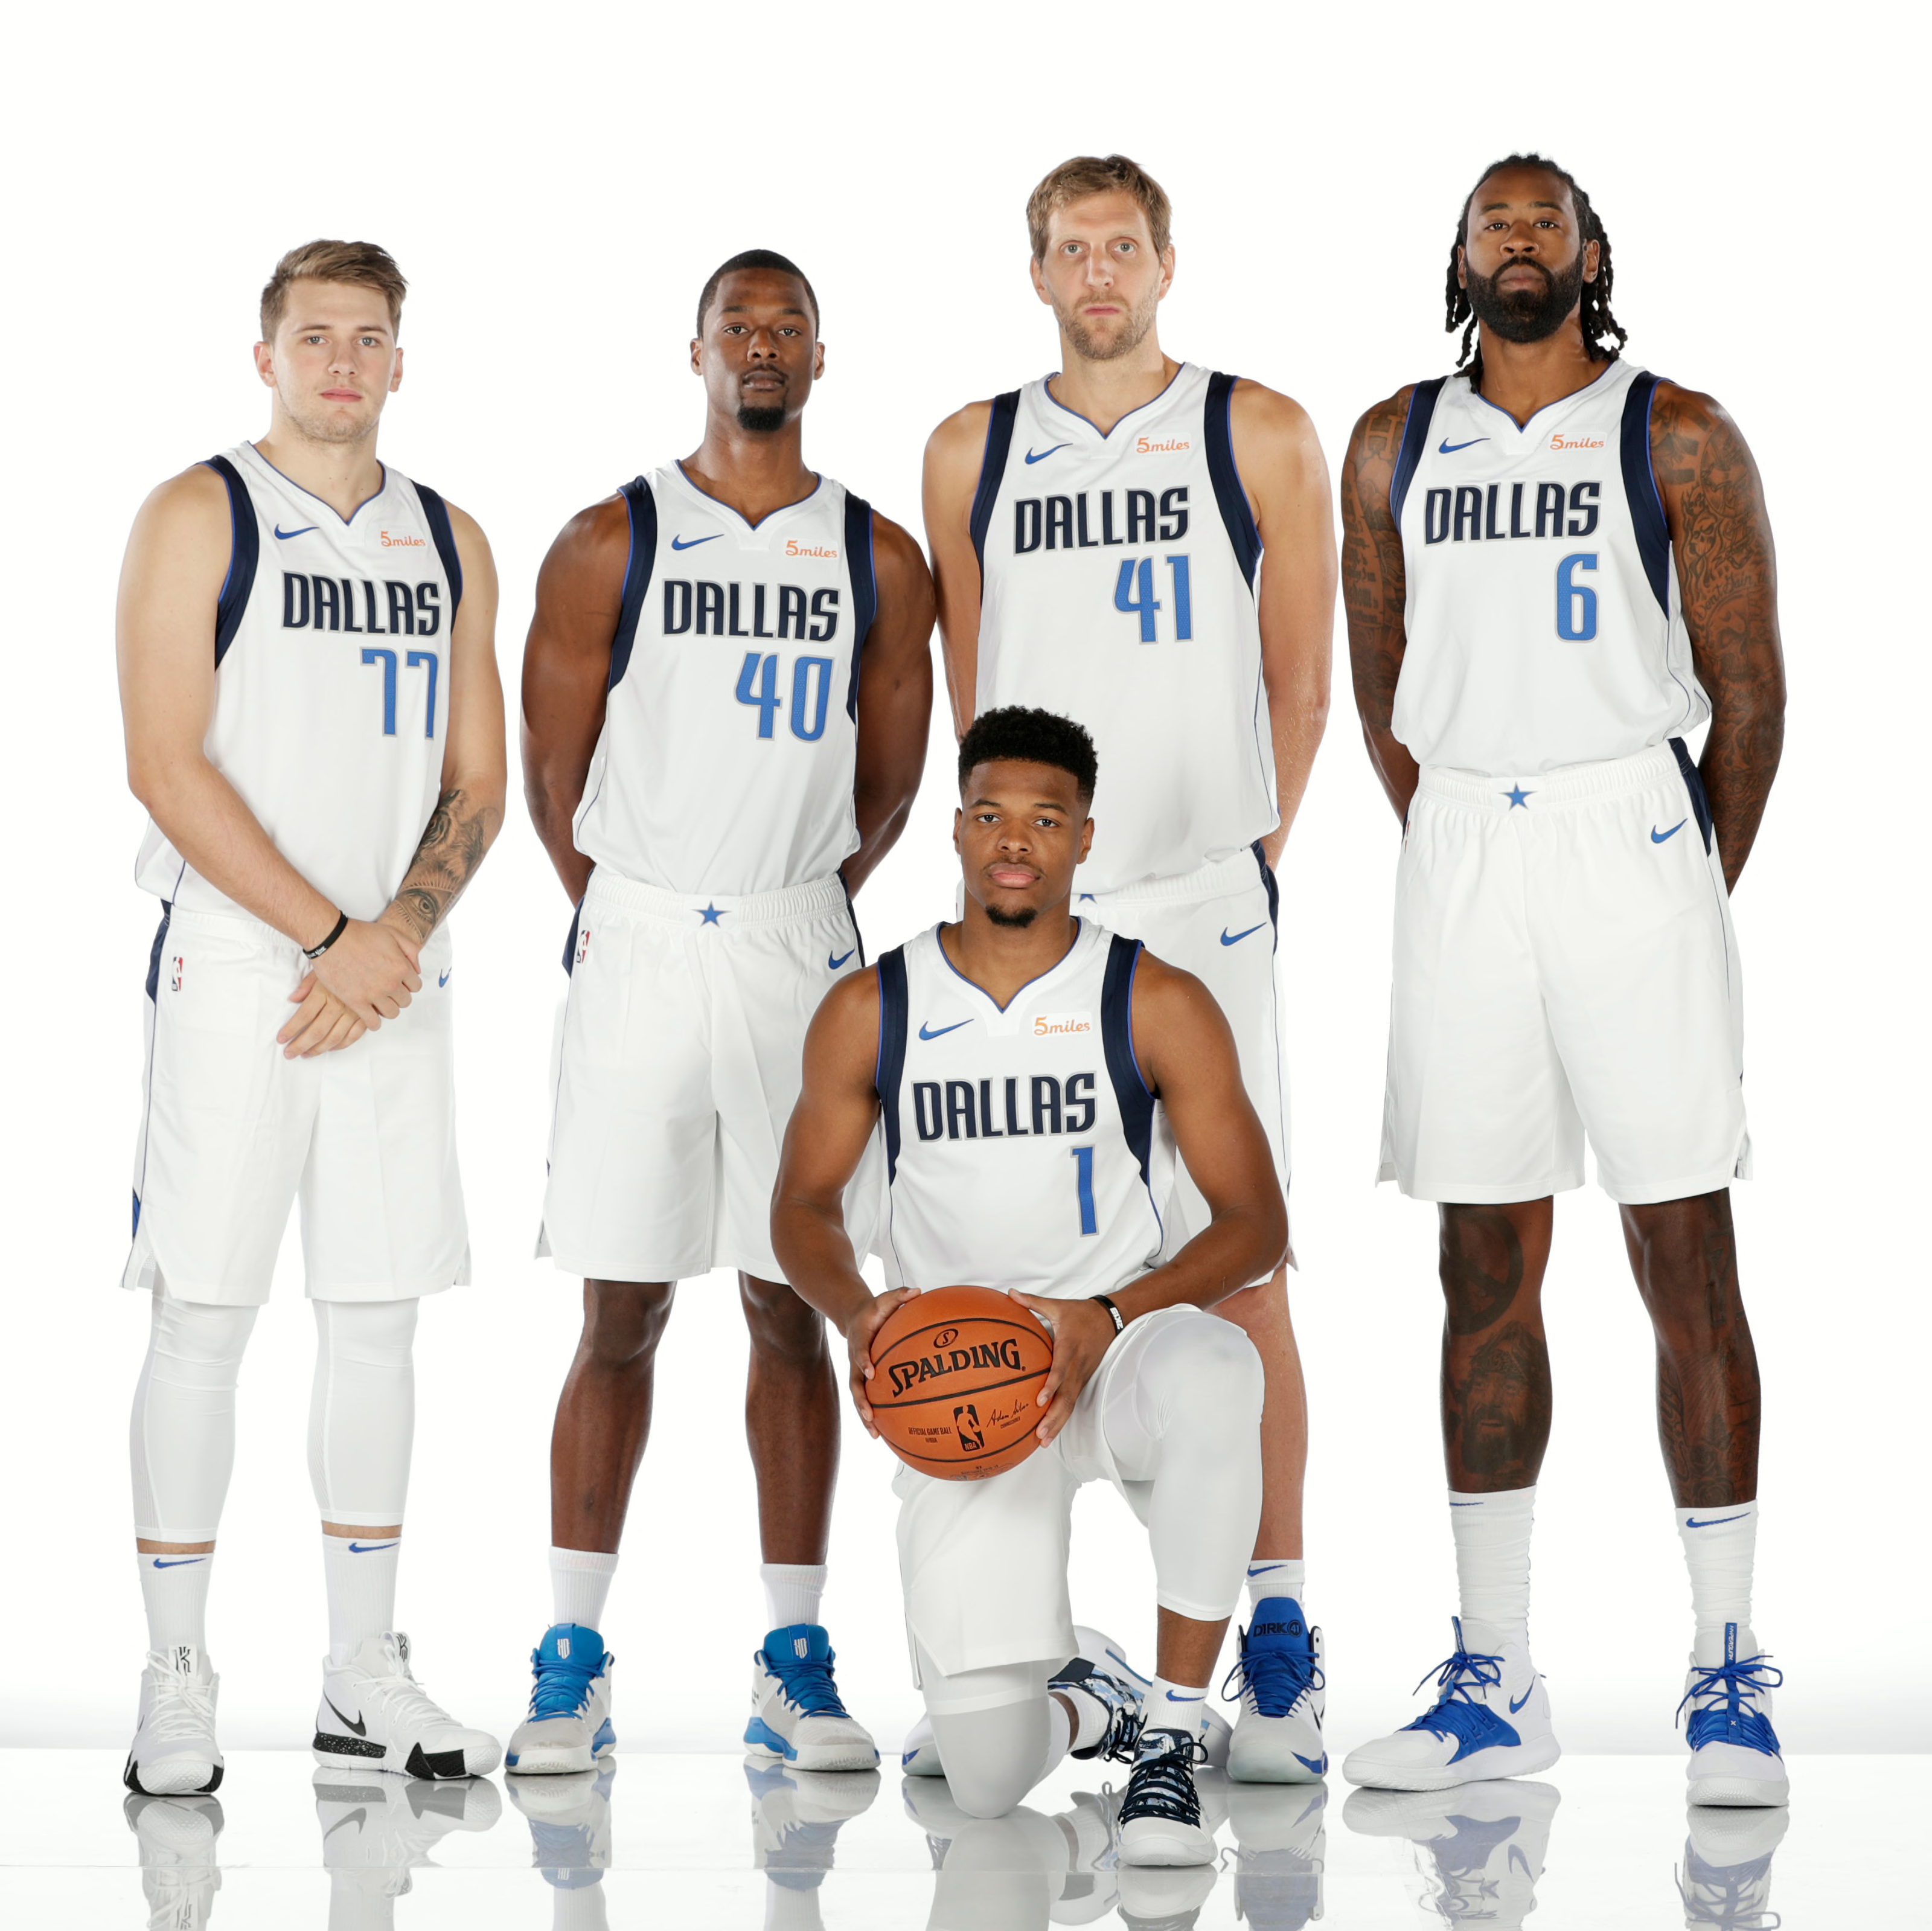 Dallas Mavericks Official 201819 NBA season preview Page 2